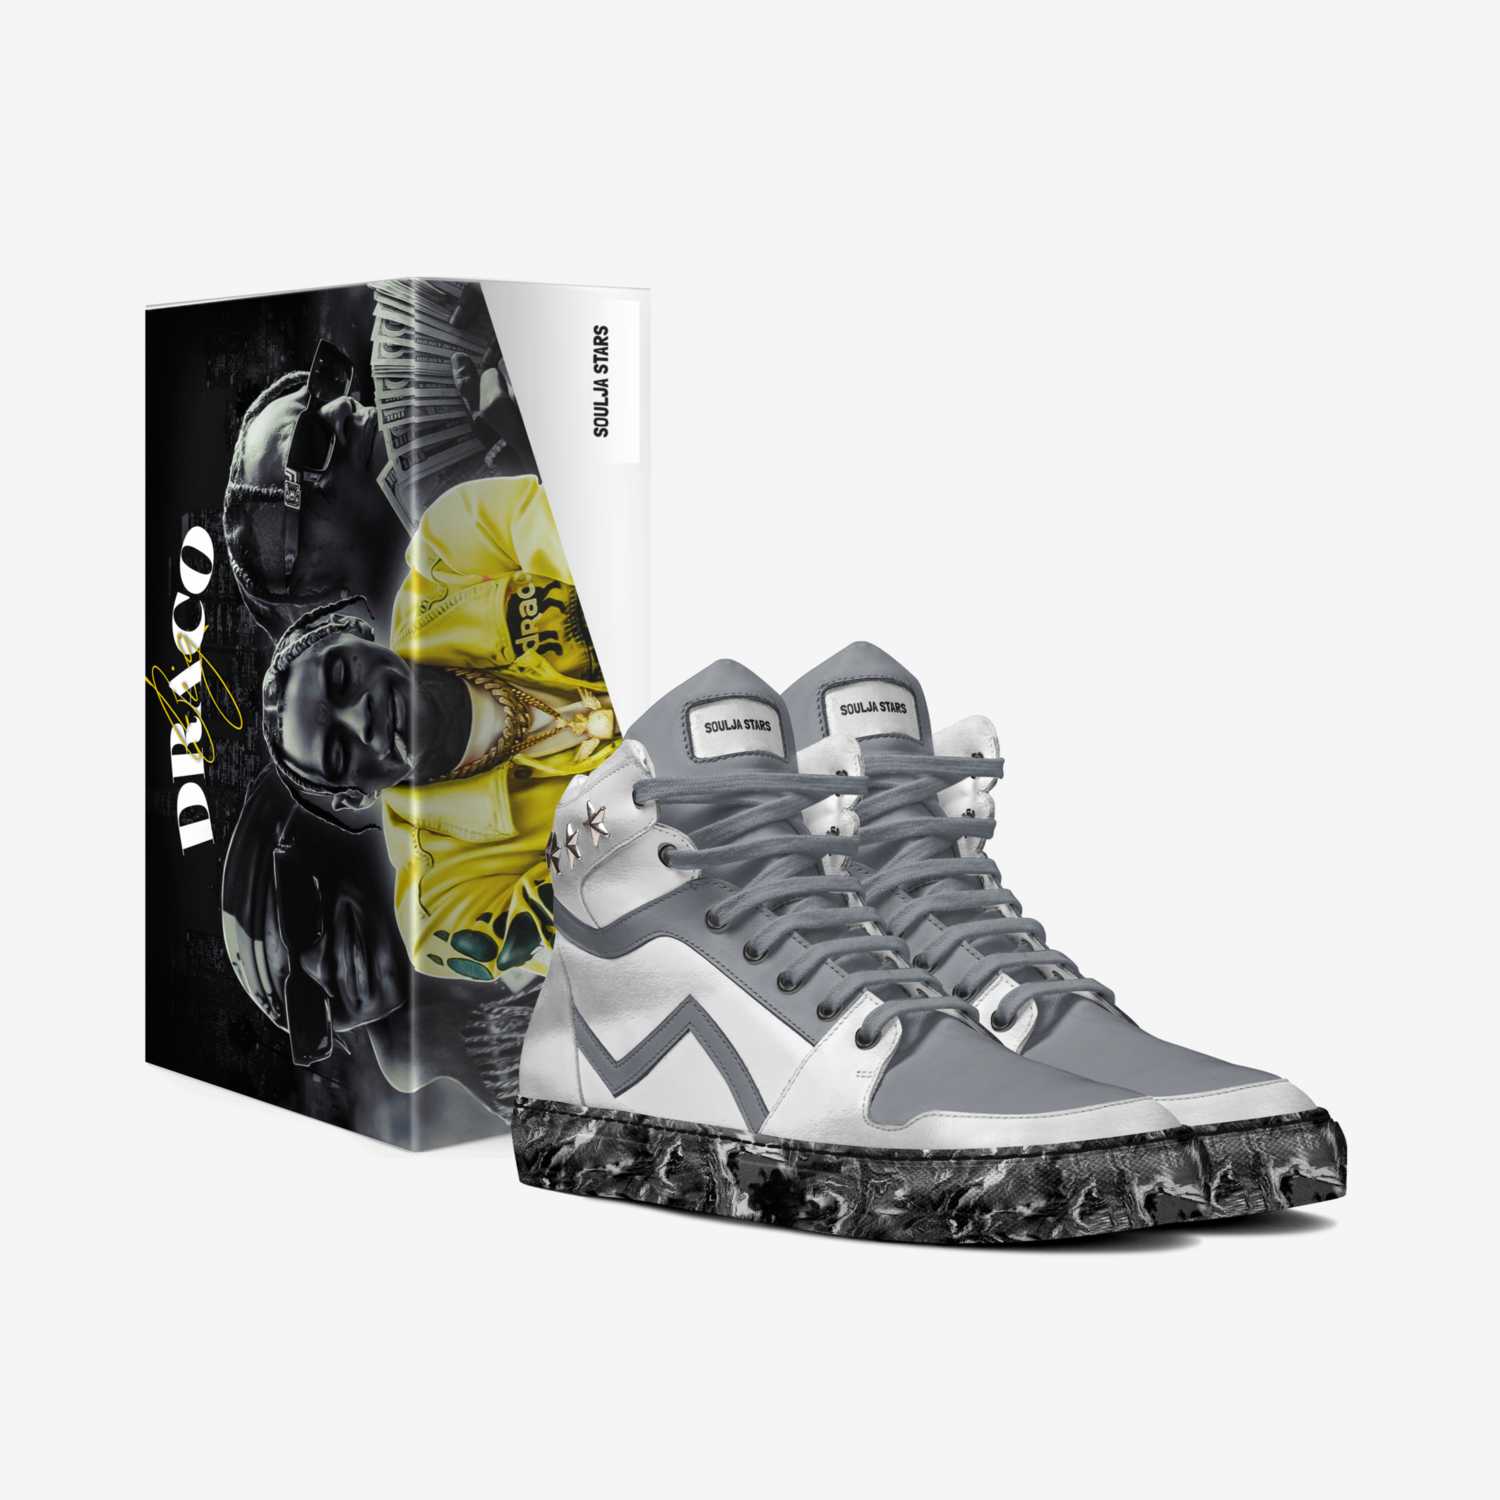 Soulja Stars custom made in Italy shoes by Soulja Boy | Box view